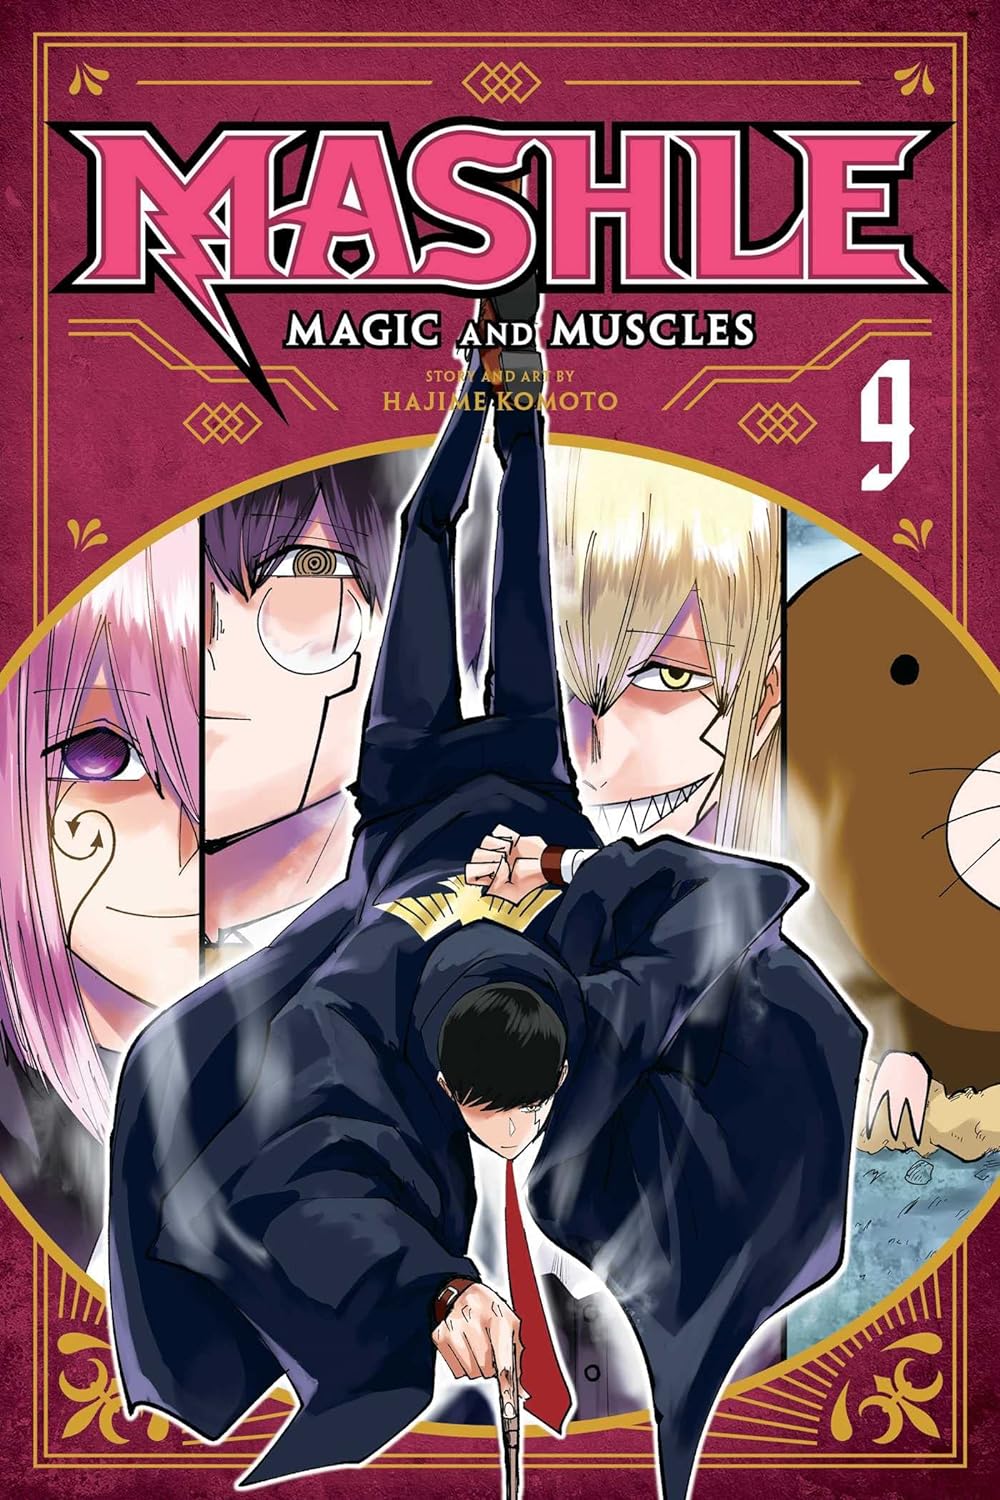 Mashle: Magic and Muscles Volume 9